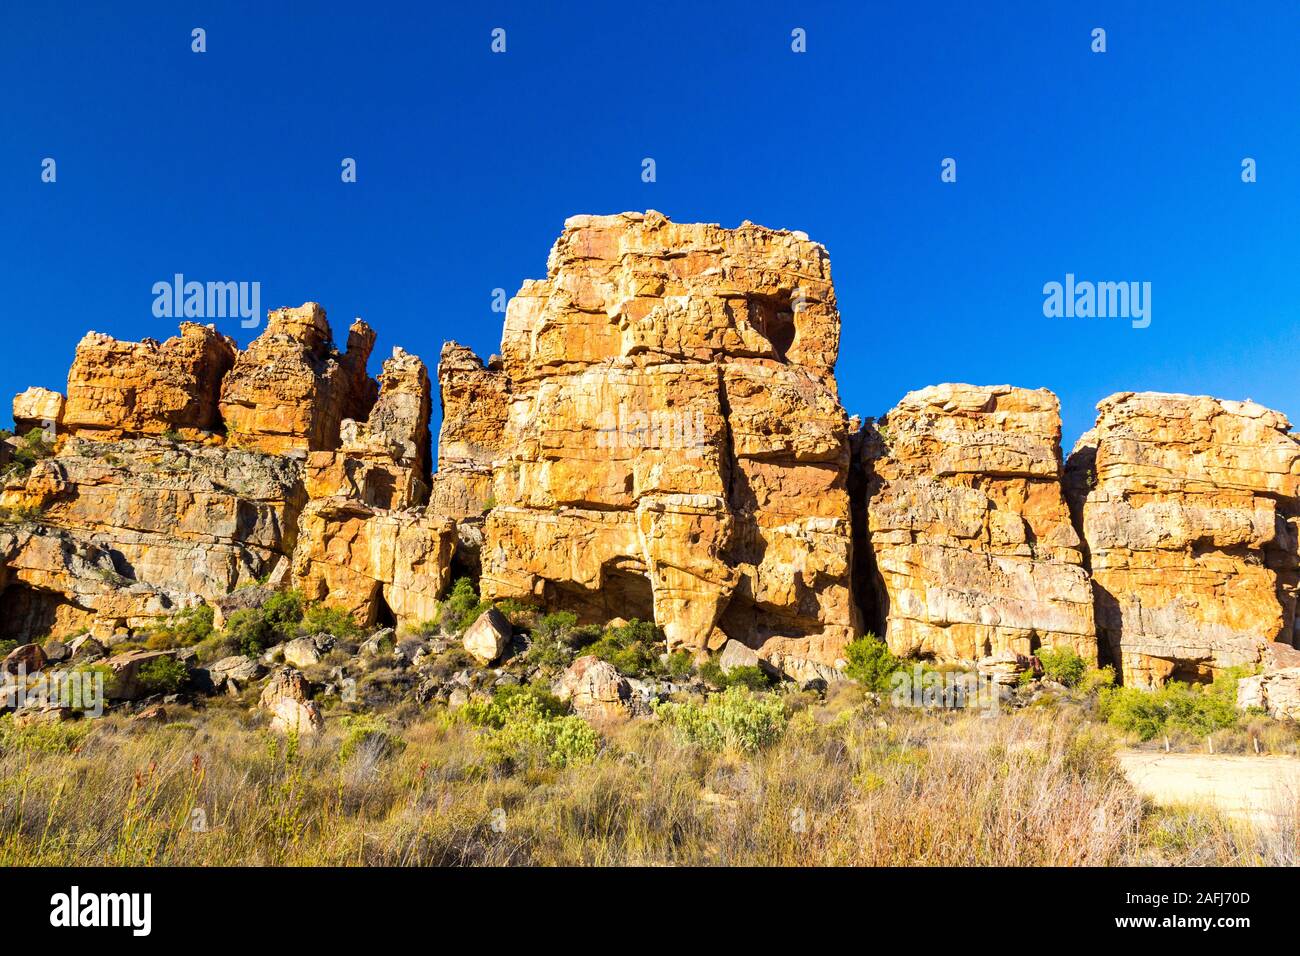 Felsformation bei Truitjieskraal, Cederberg Wilderness Area, Südafrika Stockfoto